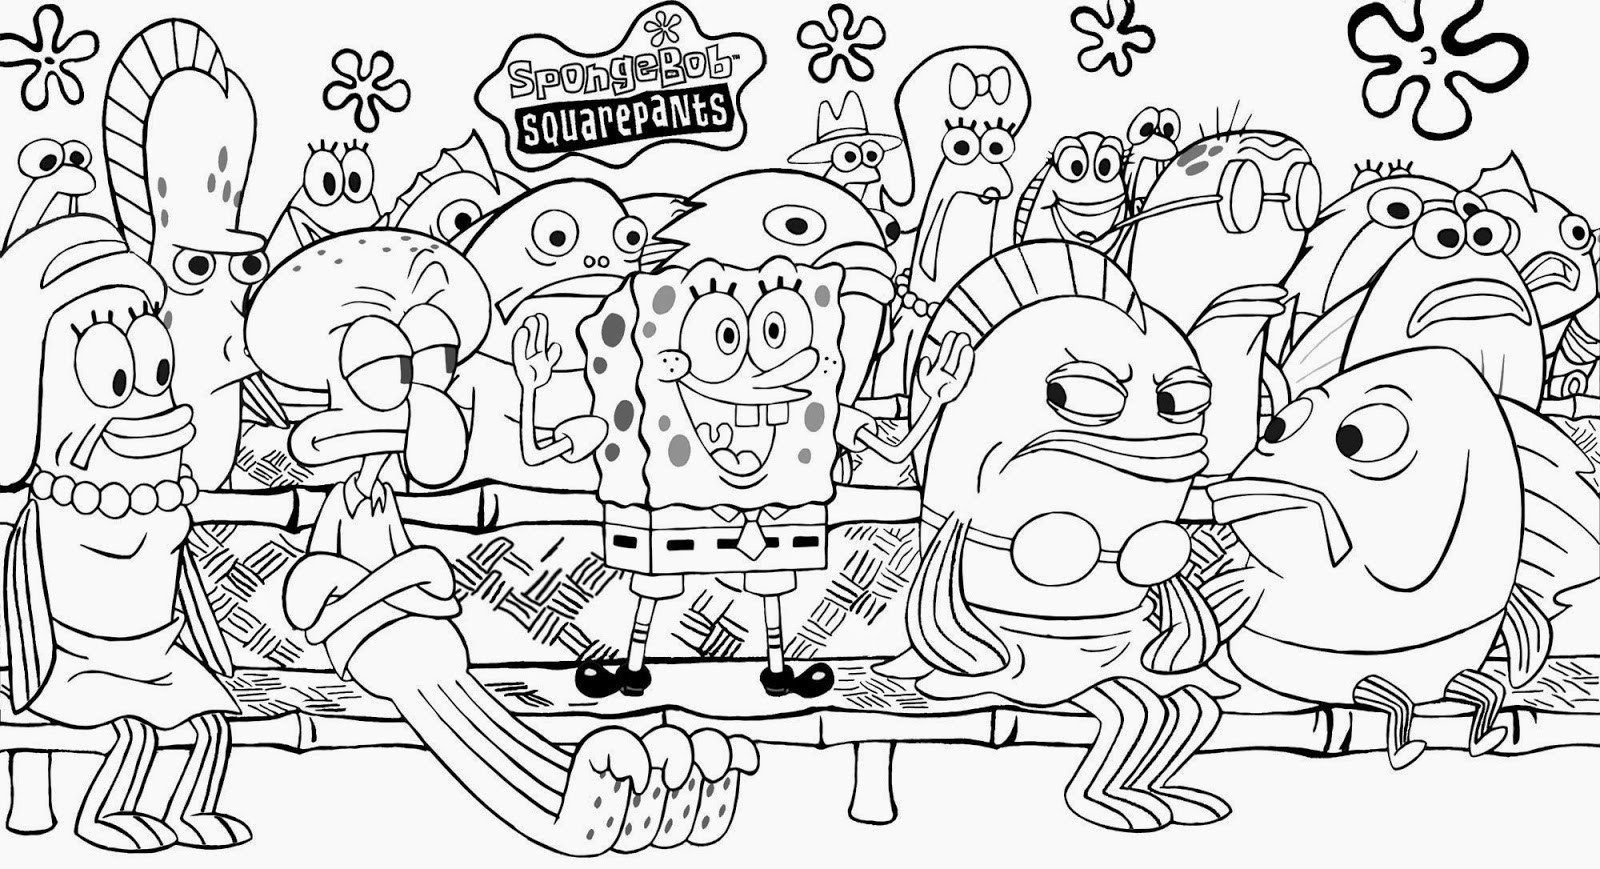 Lovely Spongebob Squarepants Coloring Pages